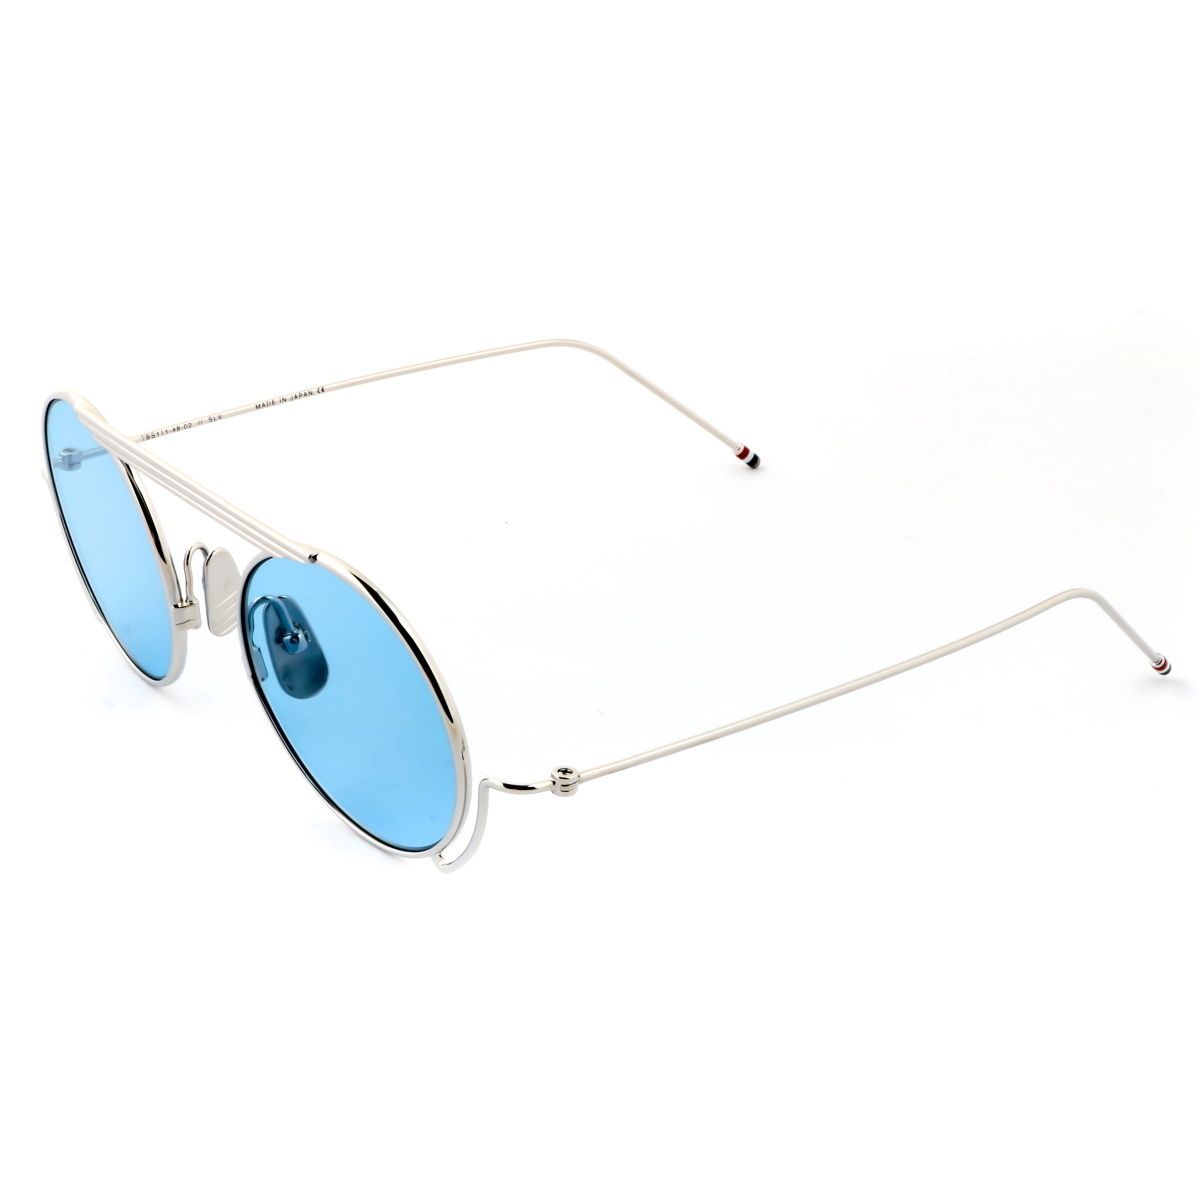 111 Round Sunglasses 2 - size 48